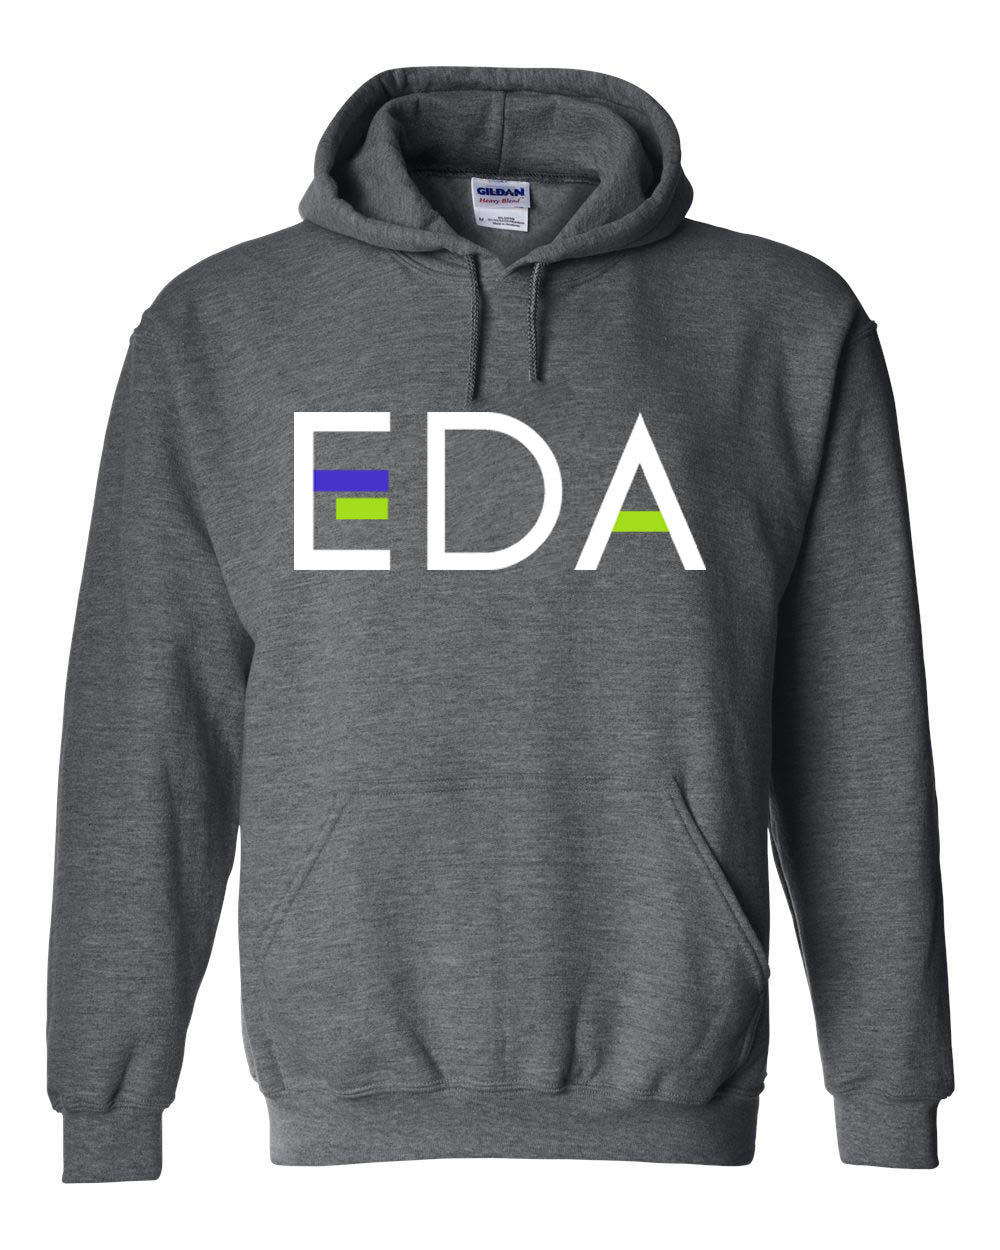 Evolution Dance Design 4 Hooded Sweatshirt